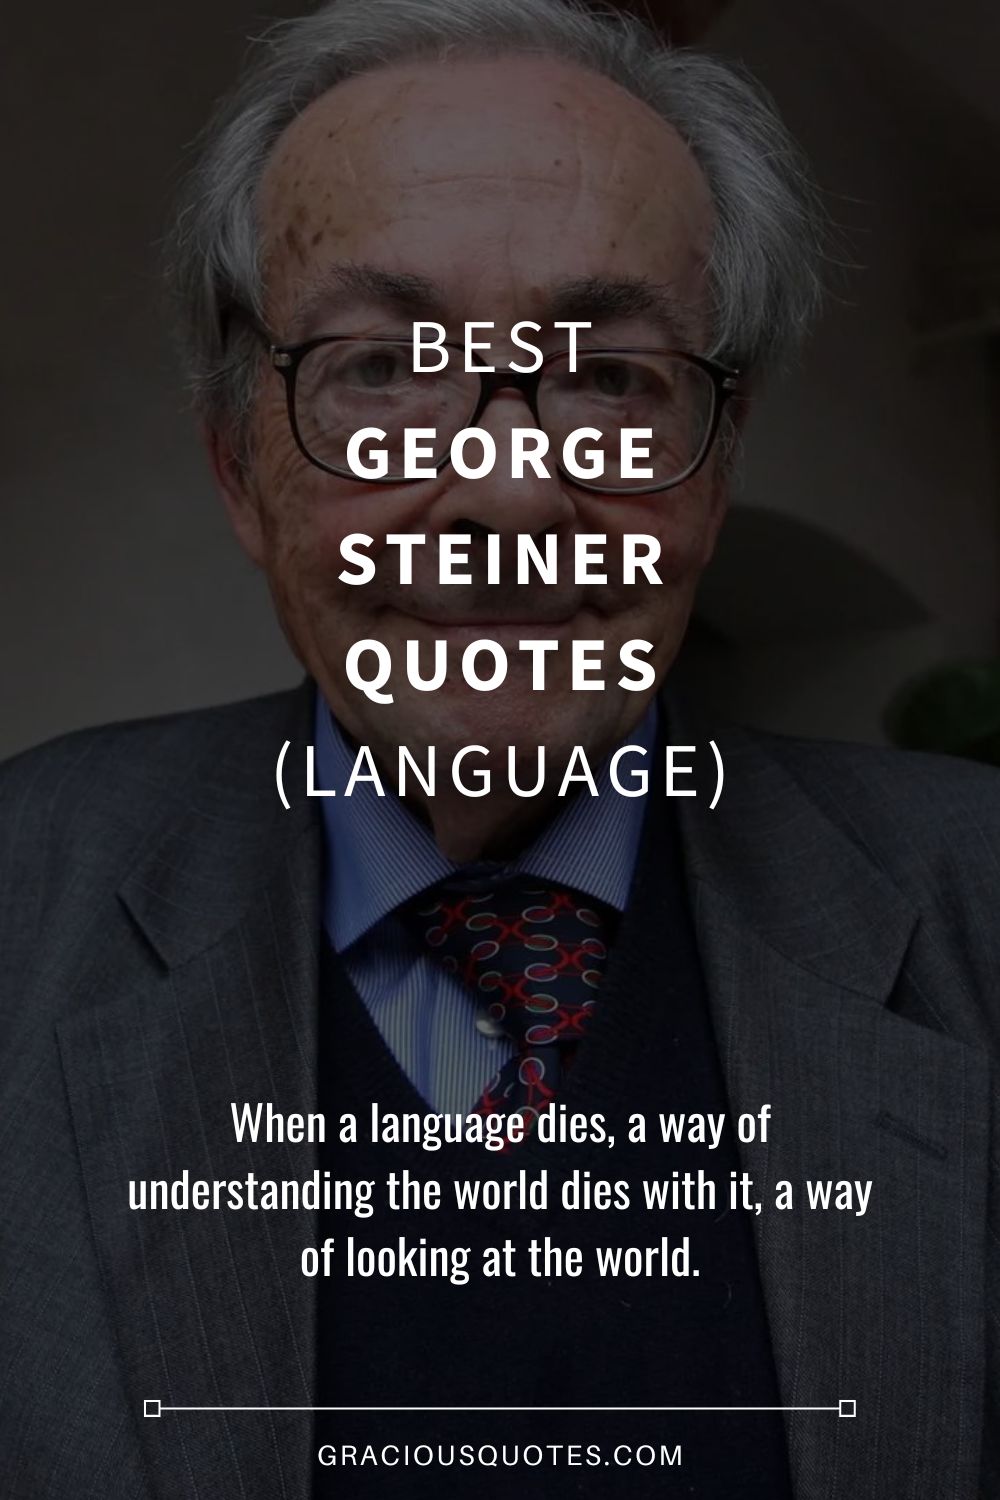 Best George Steiner Quotes (LANGUAGE) - Gracious Quotes